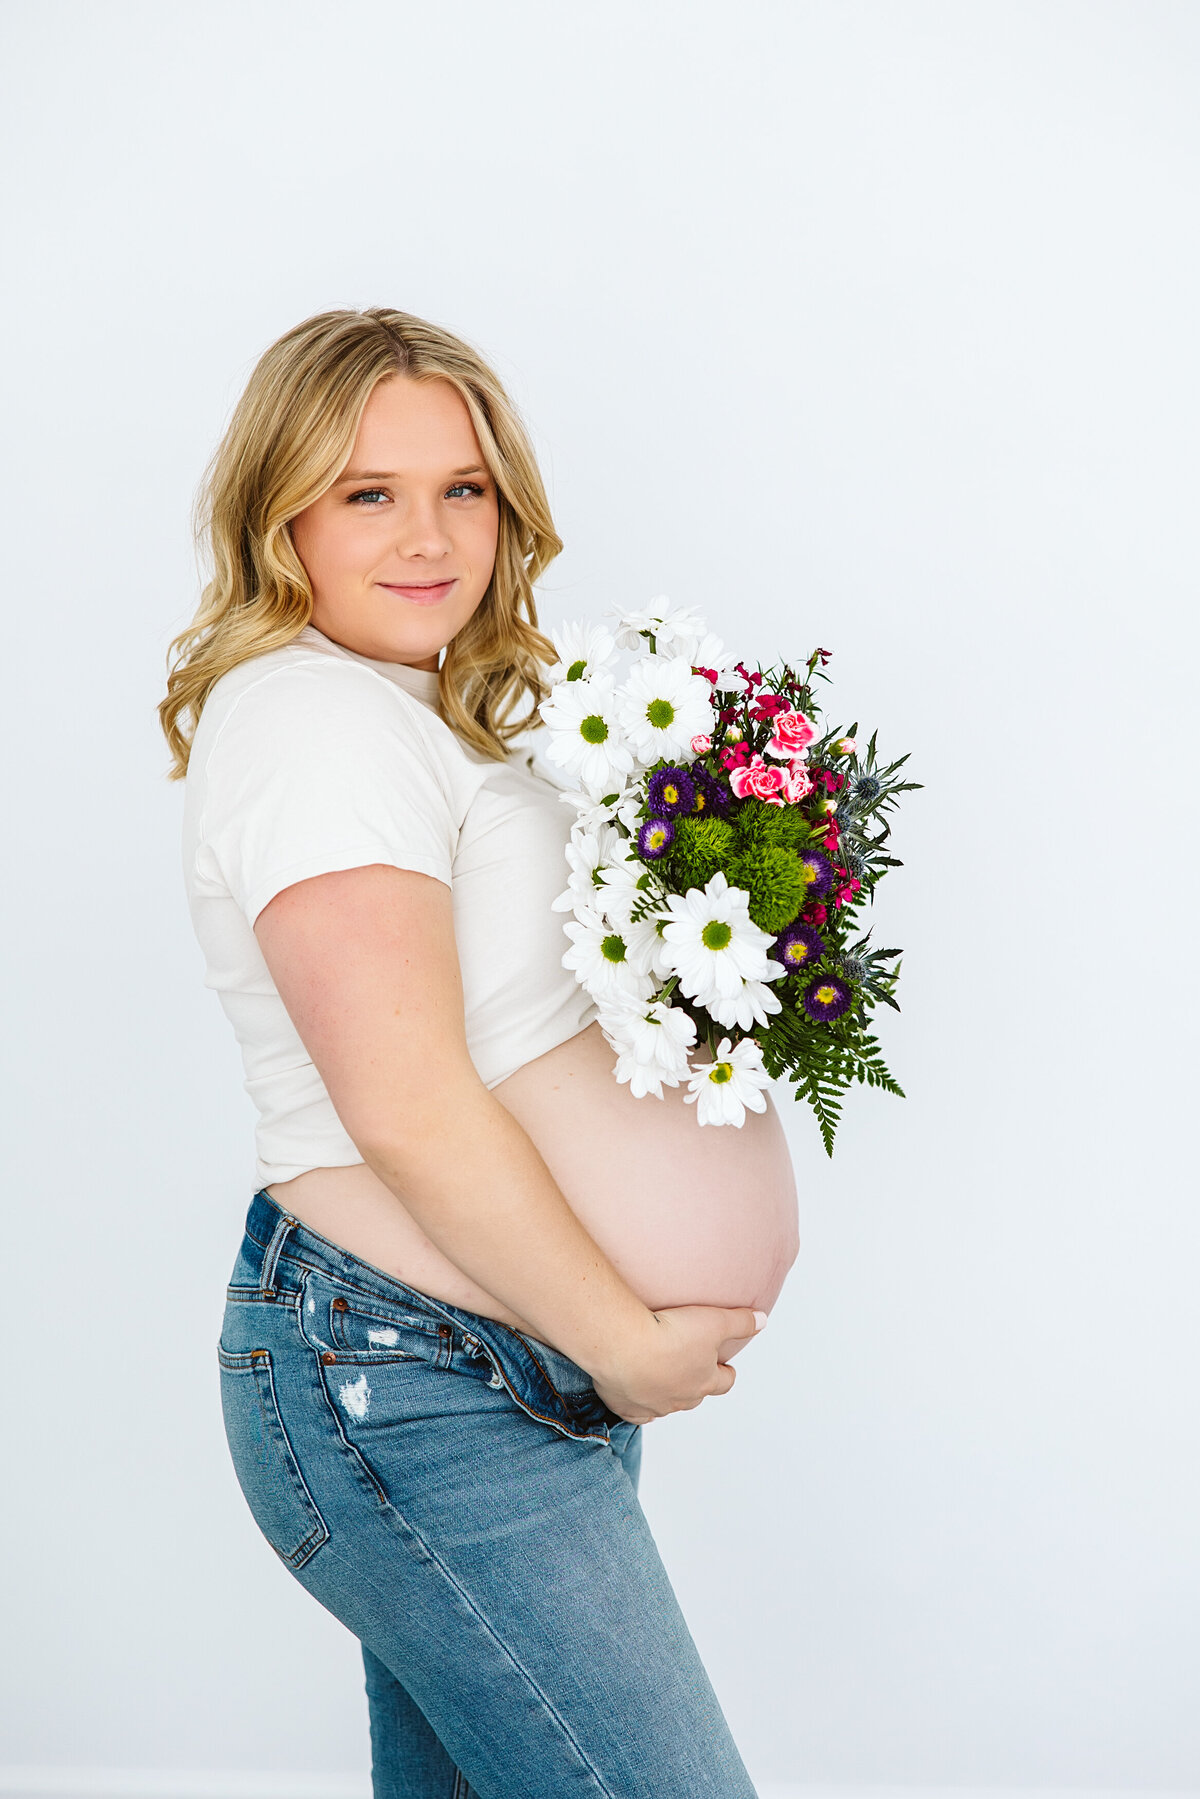 Minnesota-Alyssa Ashley Photography-Prouty maternity session-17